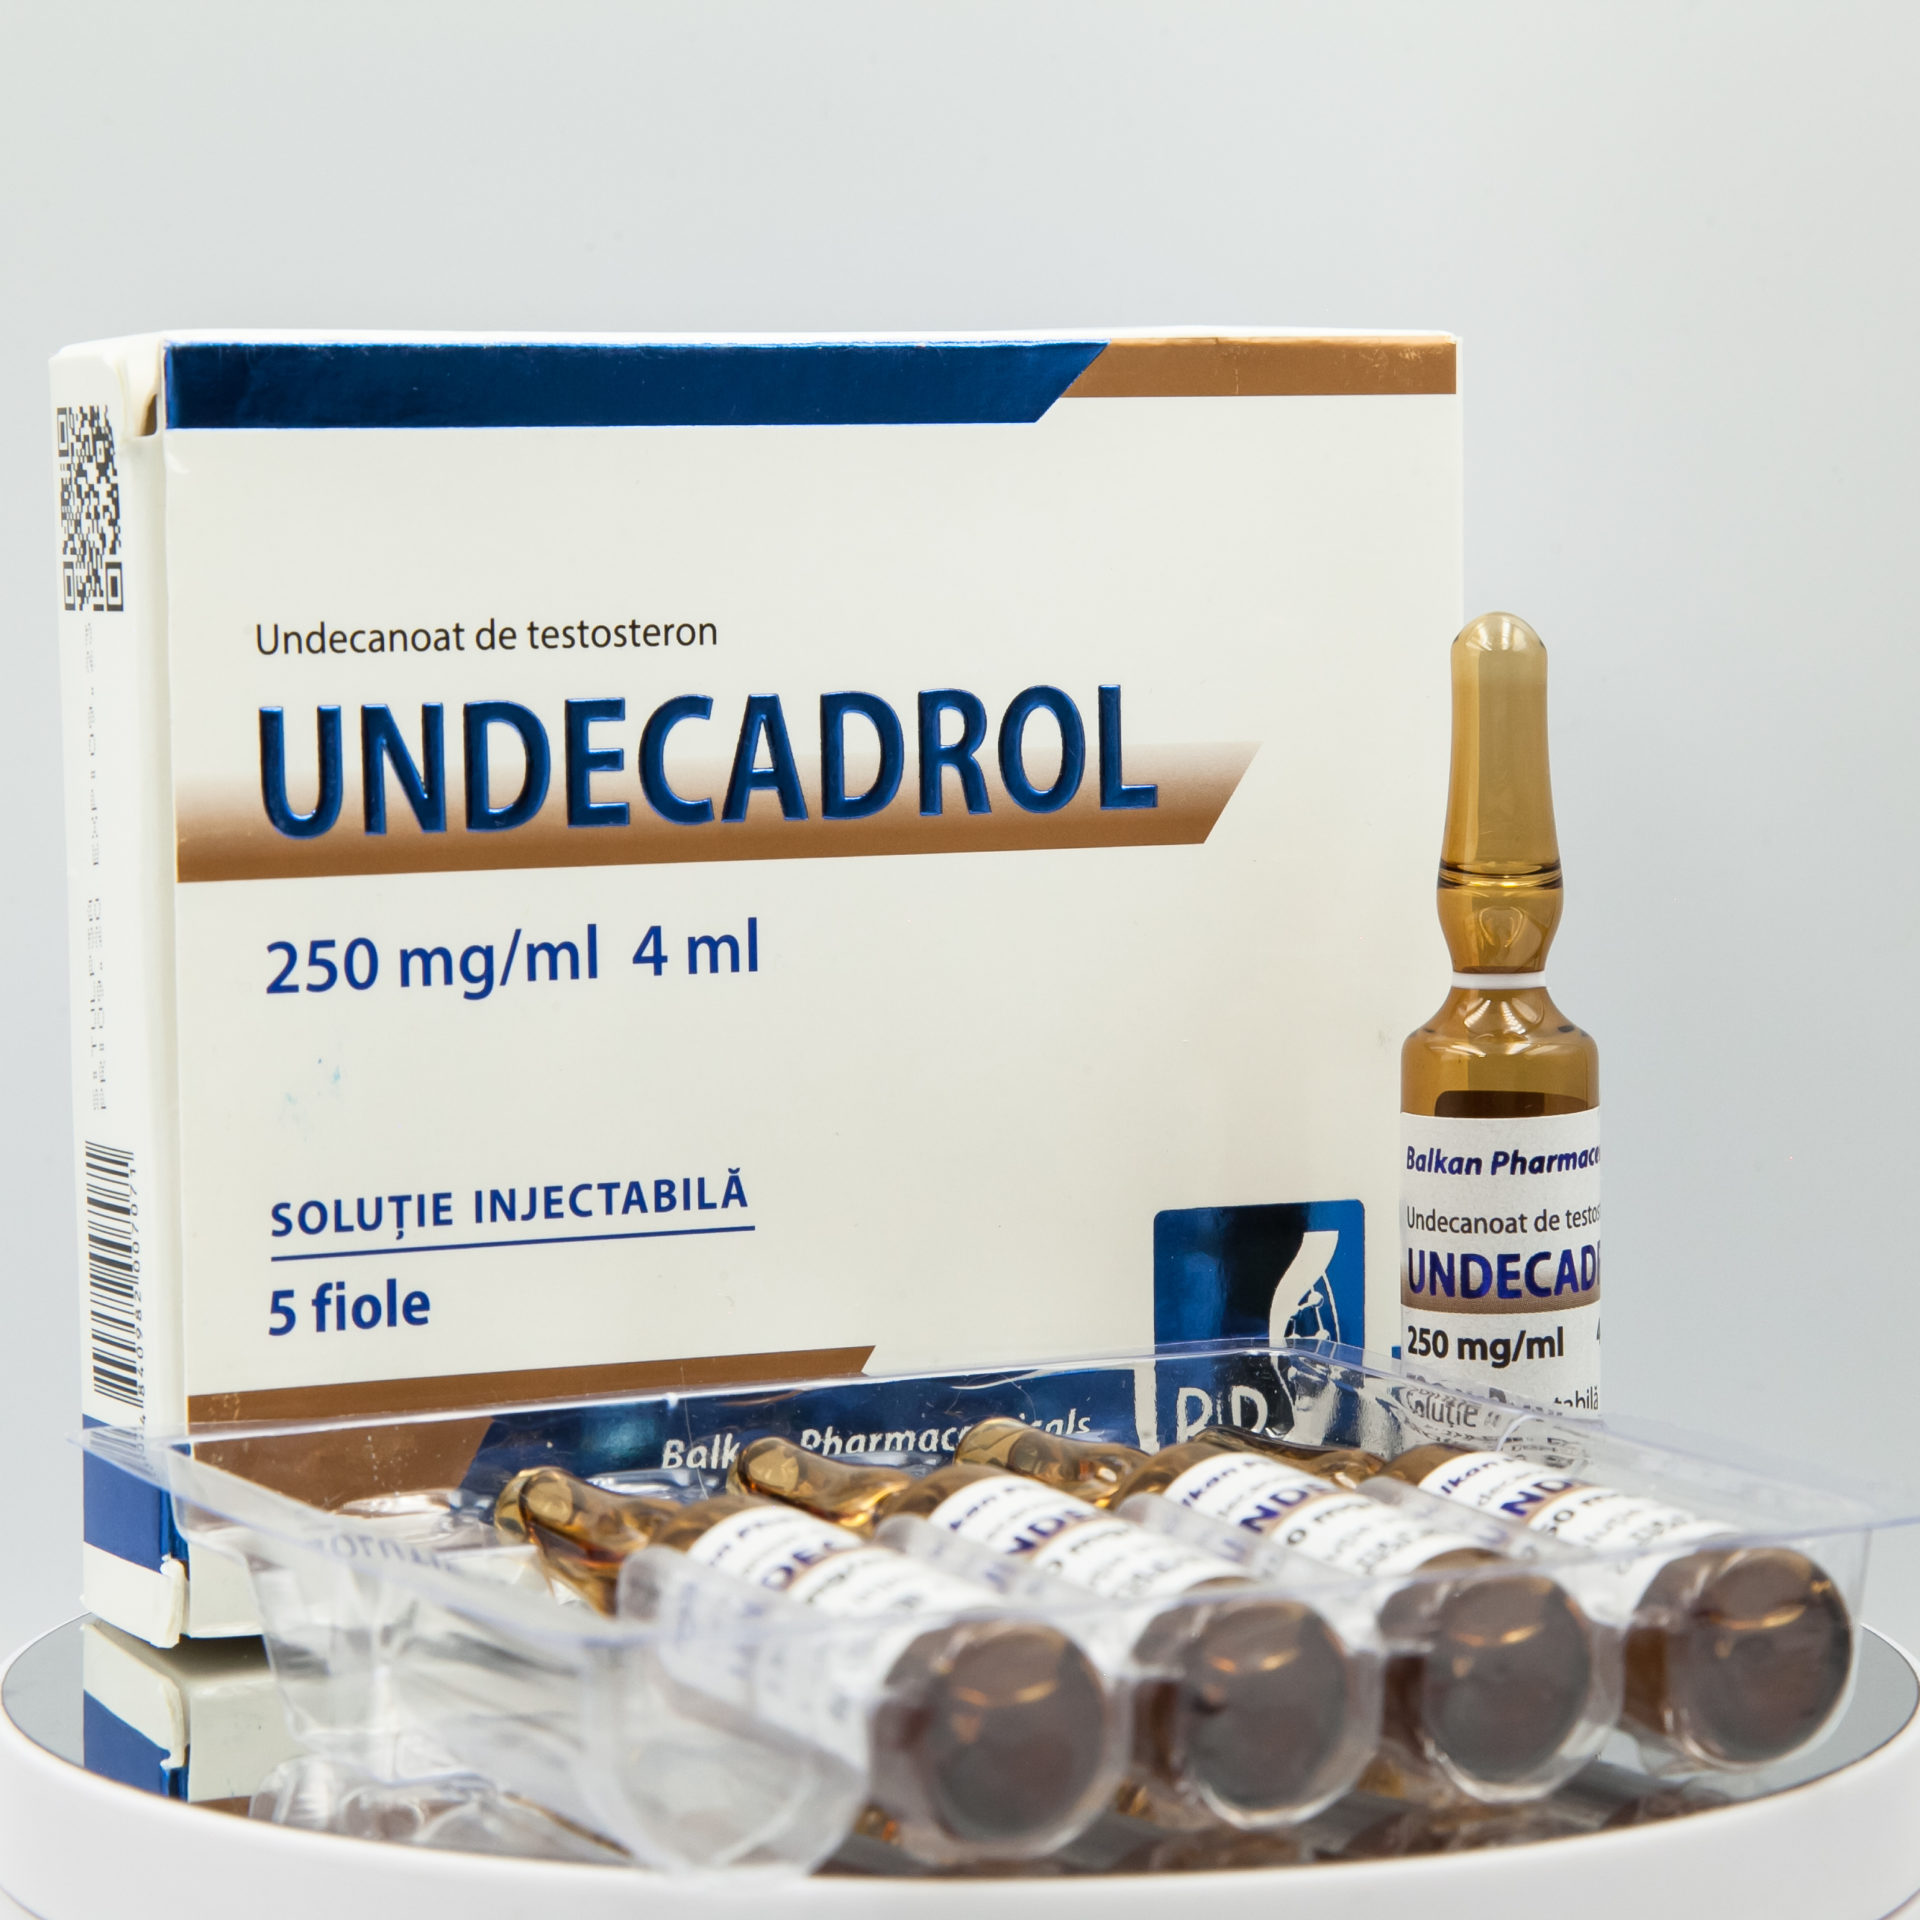 Undecadrol (Testosteron U) 250 mg Balkan Pharmaceuticals Iniezione di steroidi